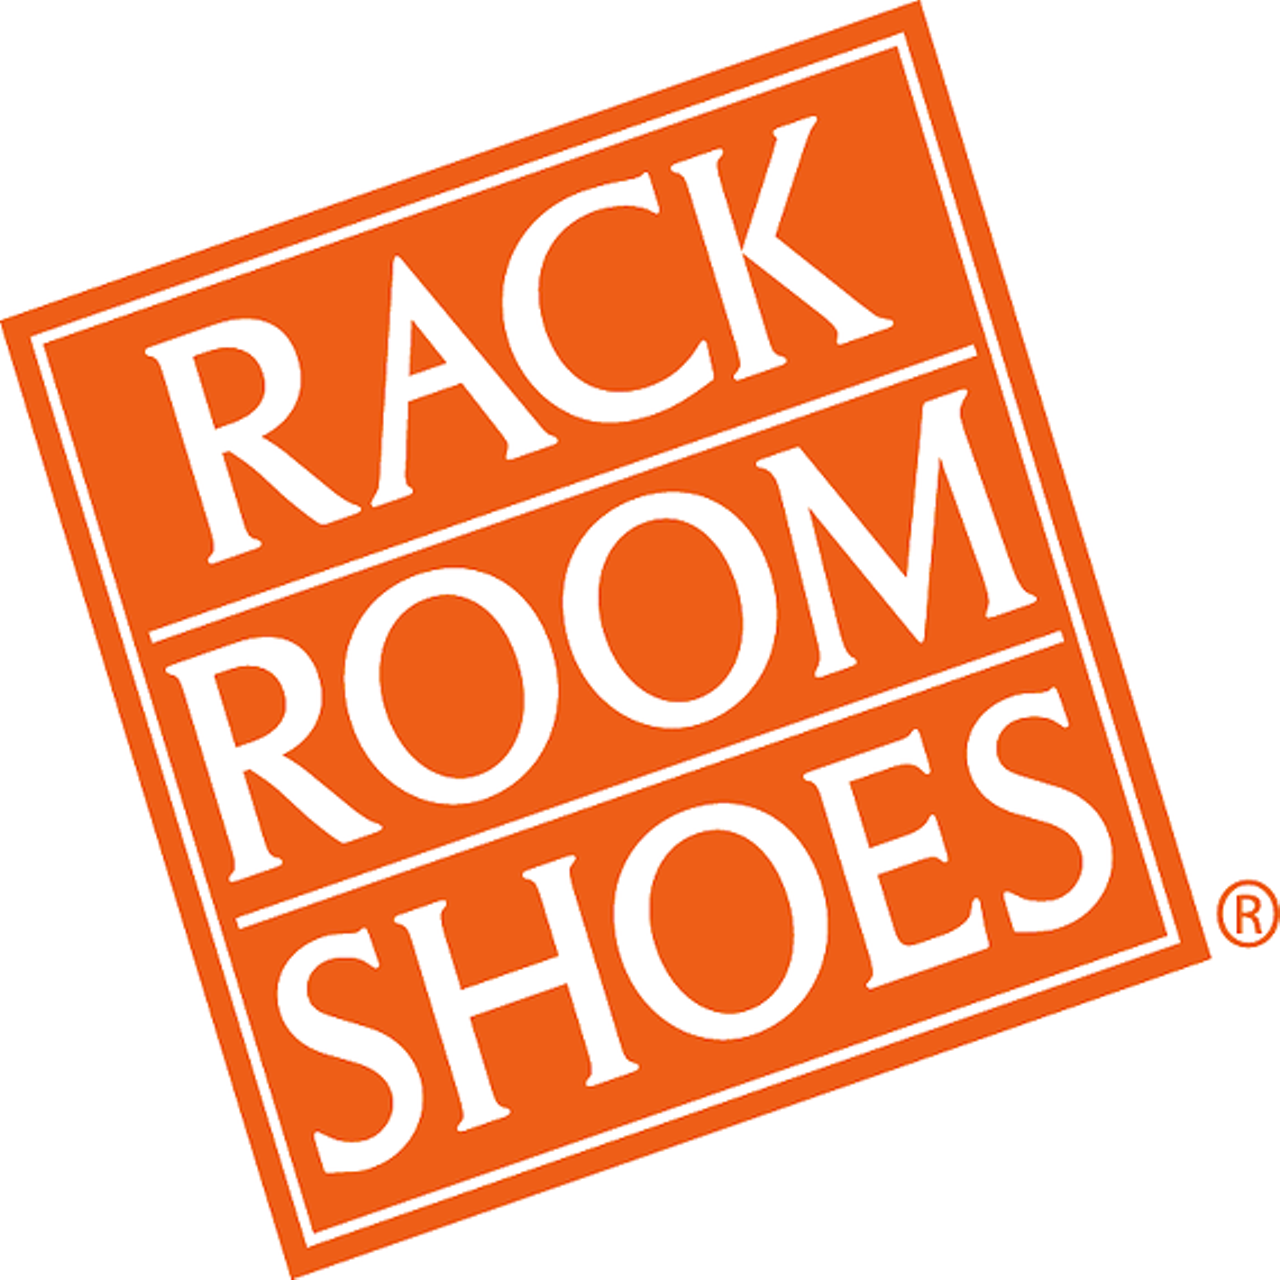 rack room shoes louisiana ave